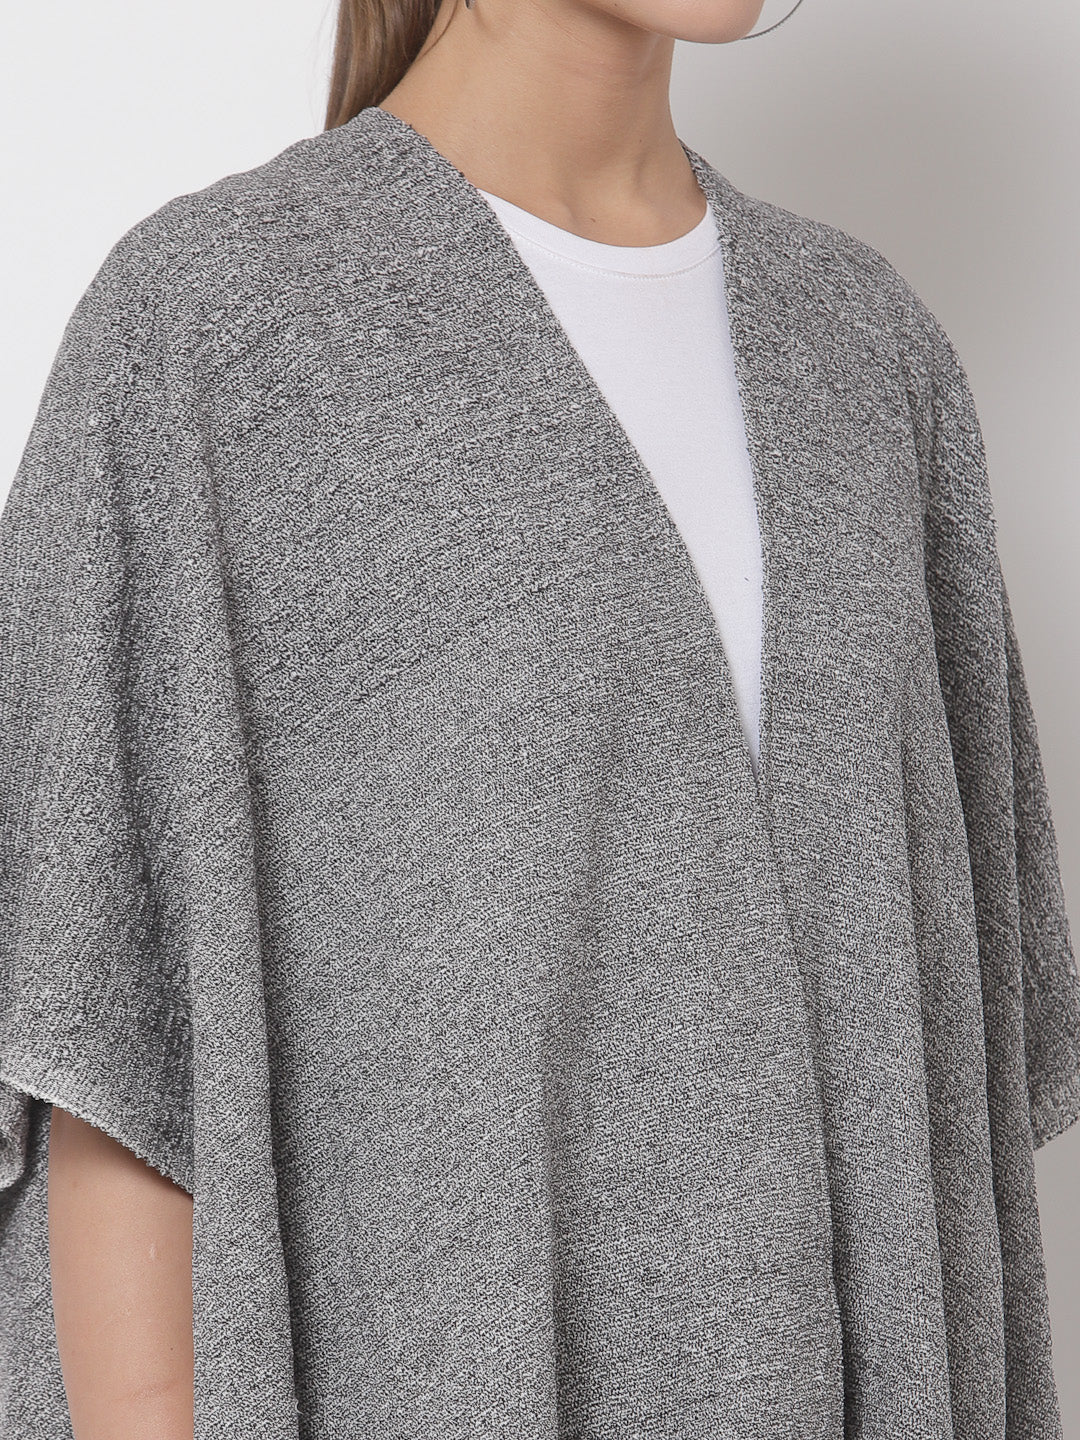 Arrabi Grey Solid Cotton Chenille Full Size Shrug (160 x 100 cm)